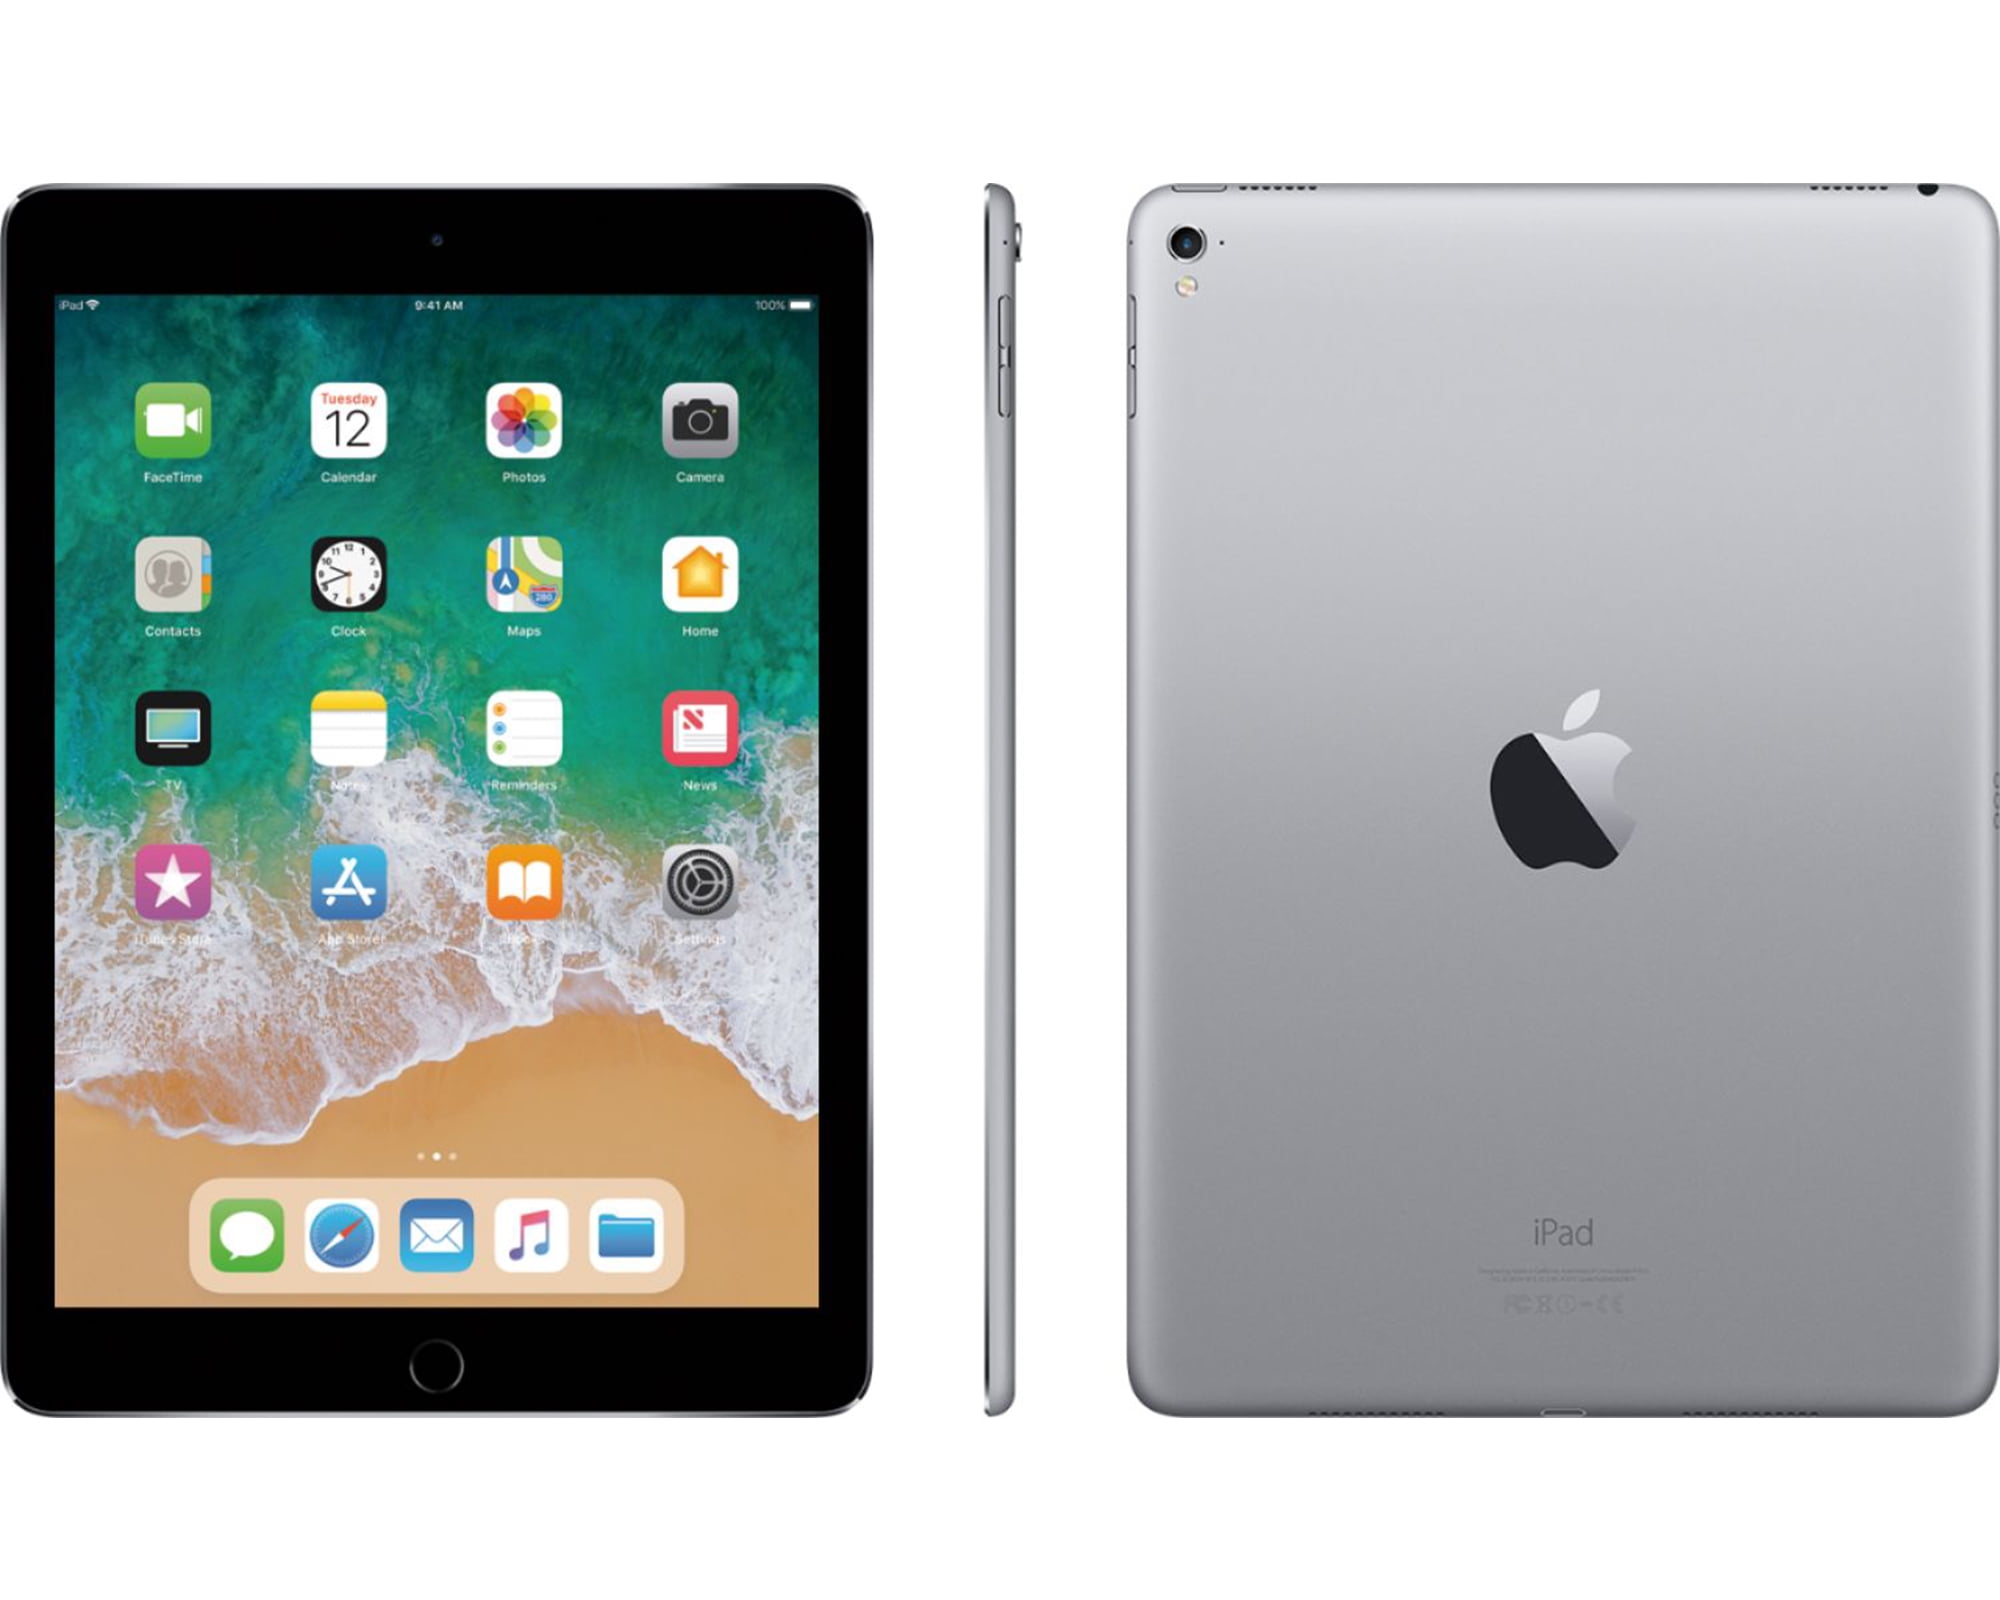 Apple iPad Pro 9.7-inch Wi-Fi + Cellular 128GB Space Gray Used 